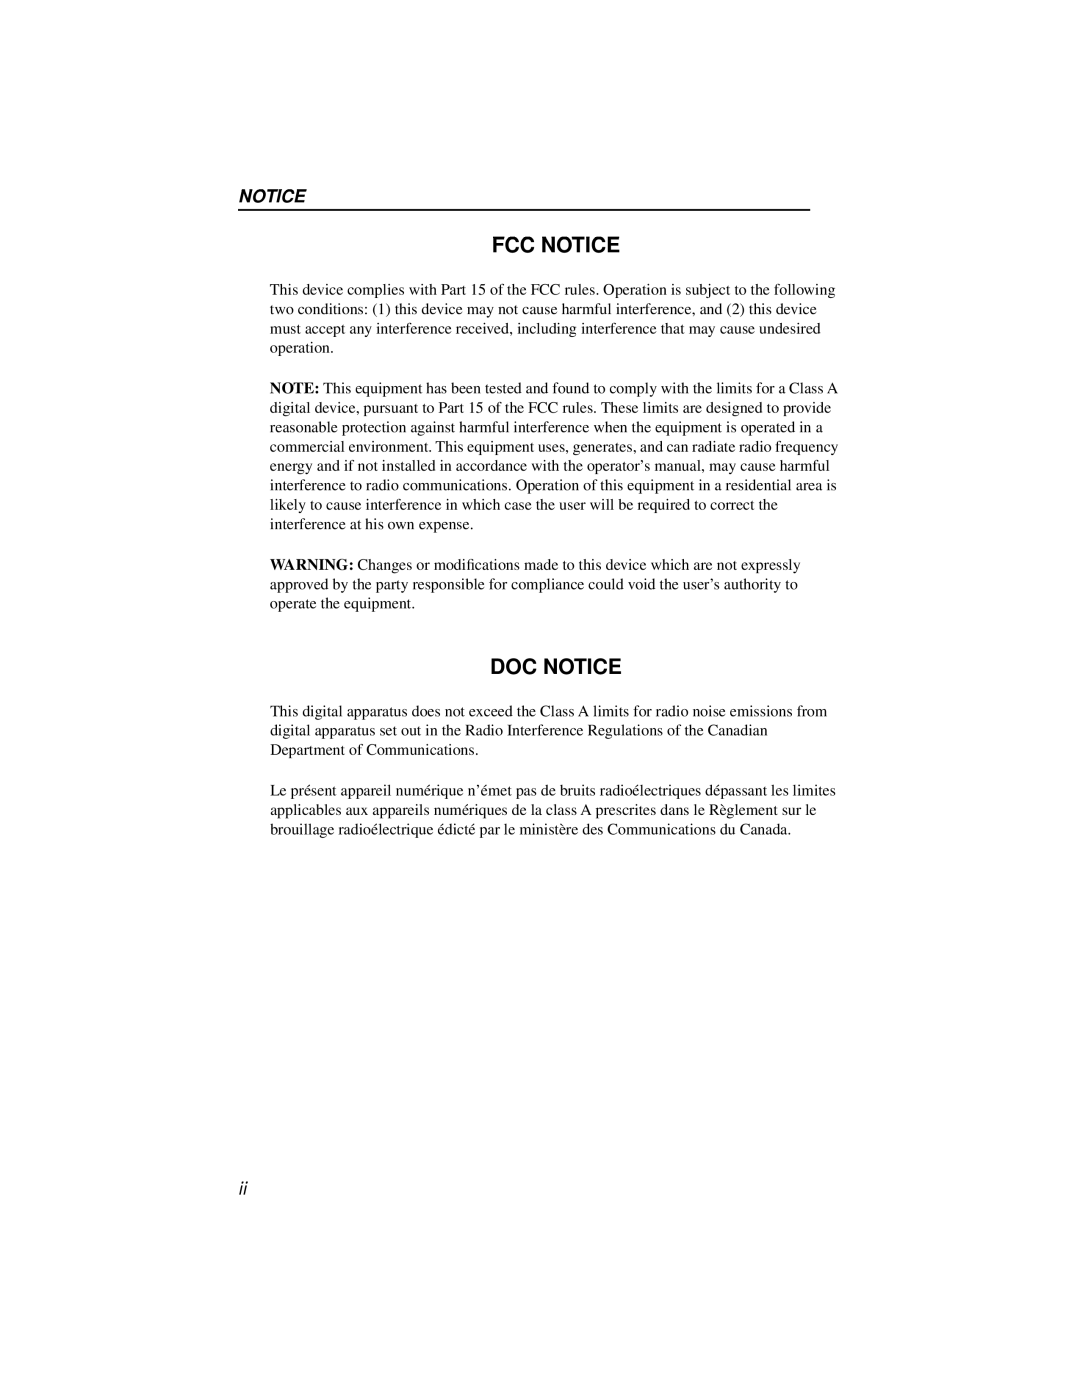 Cabletron Systems BRIM-WT1 manual Fcc Notice, Doc Notice 